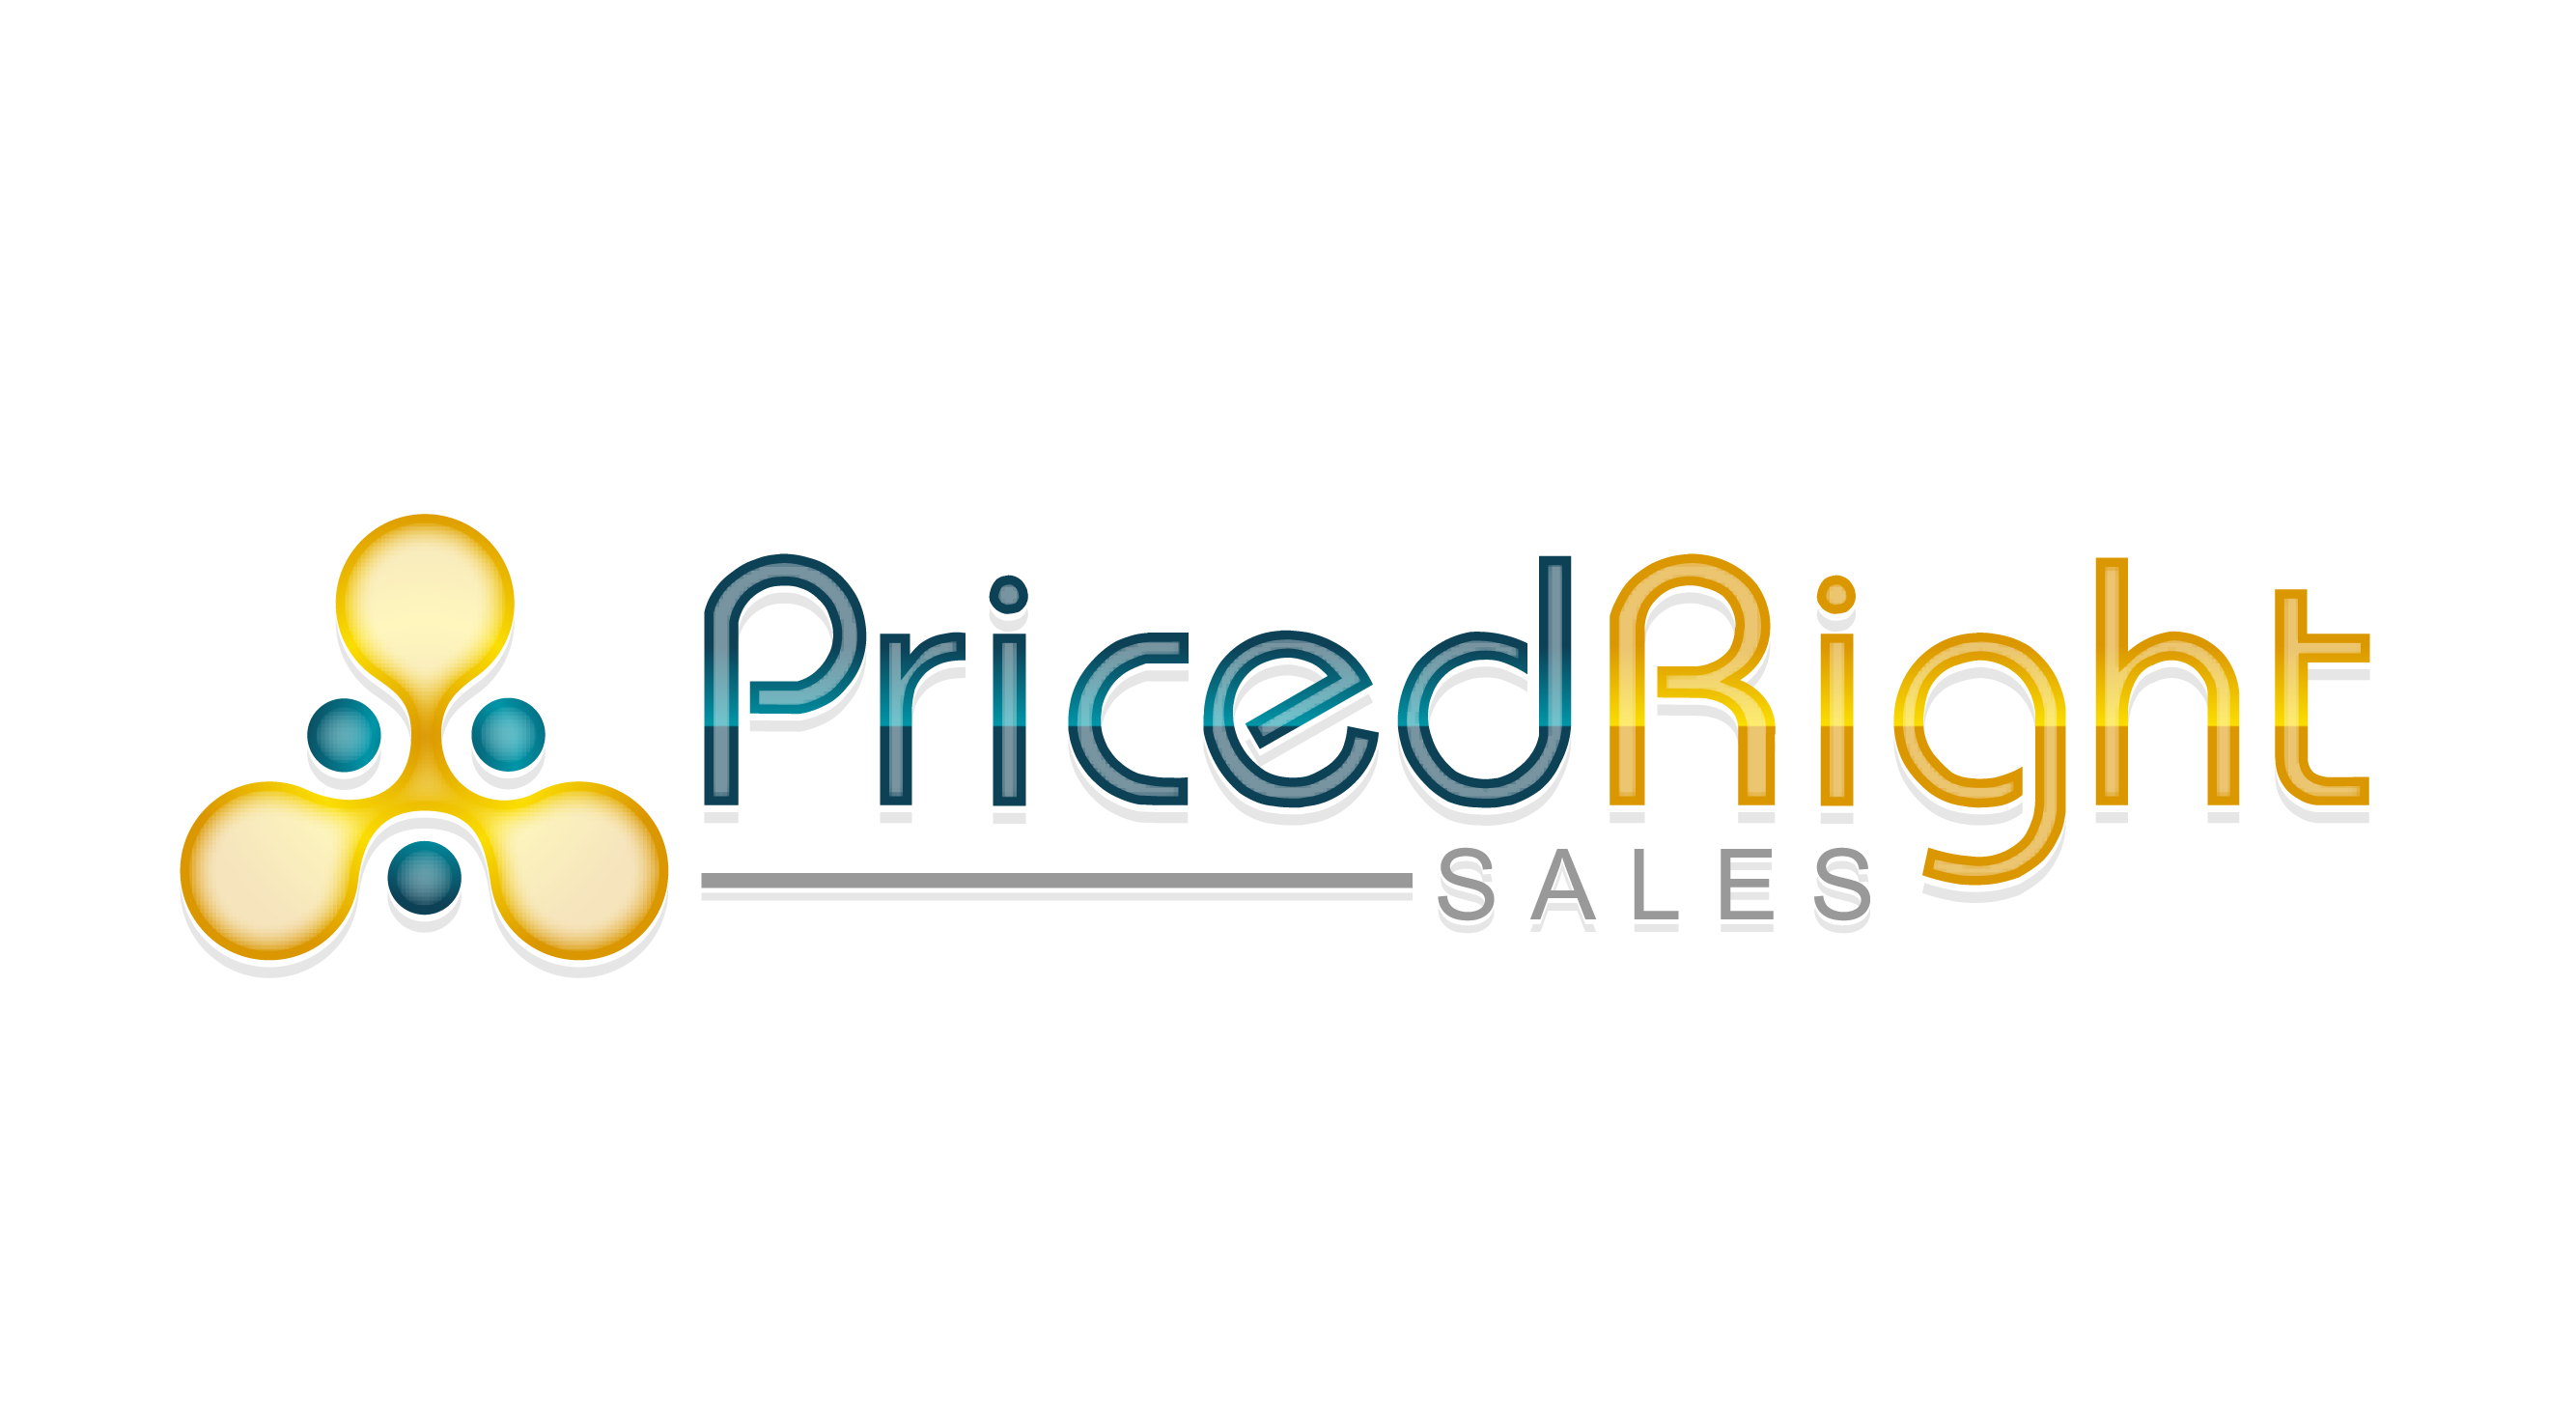 Pricedrightsales